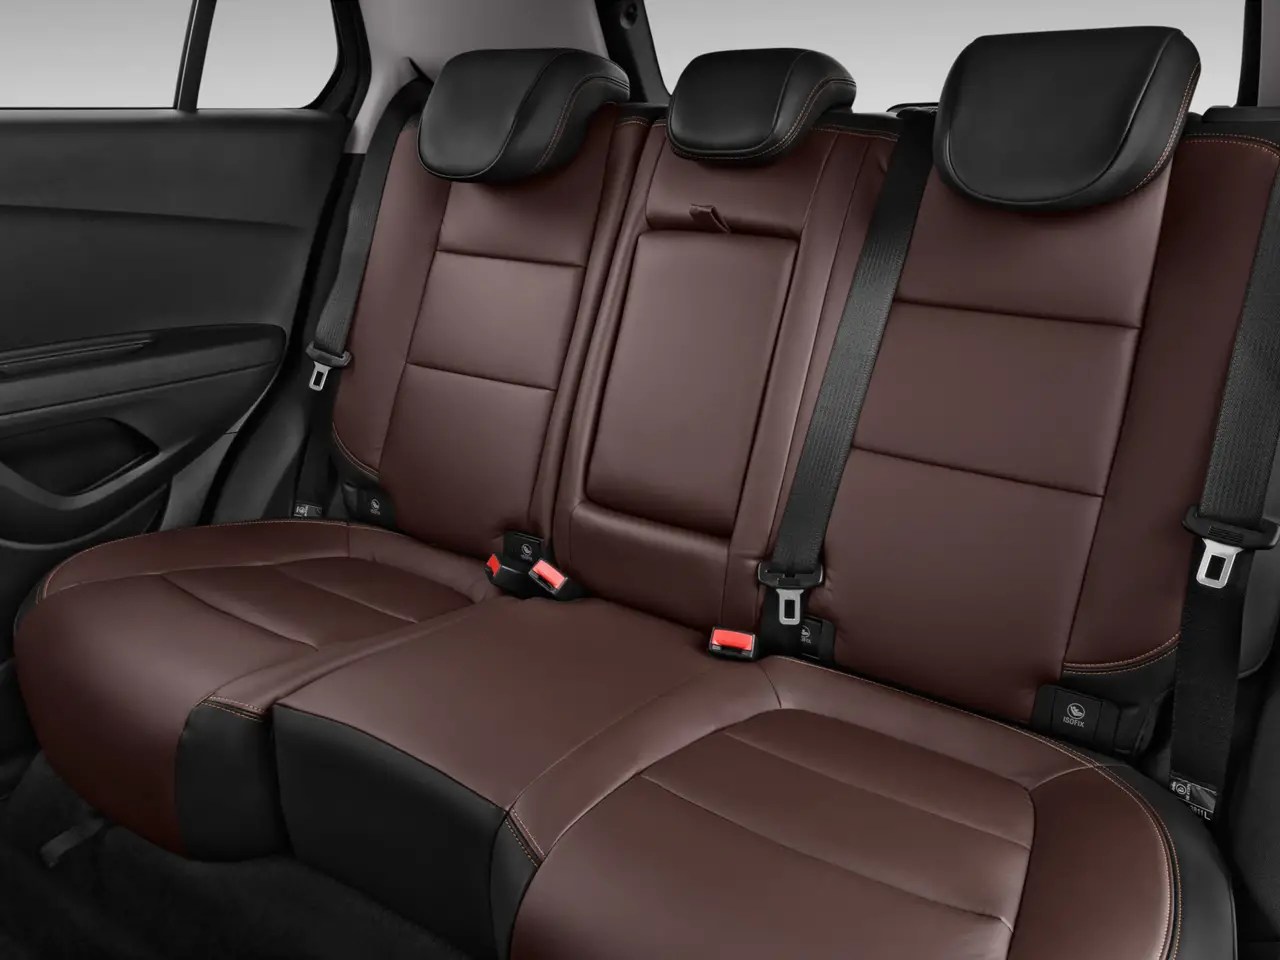 Chevrolet Trax LTZ 2016 interior rear seat view